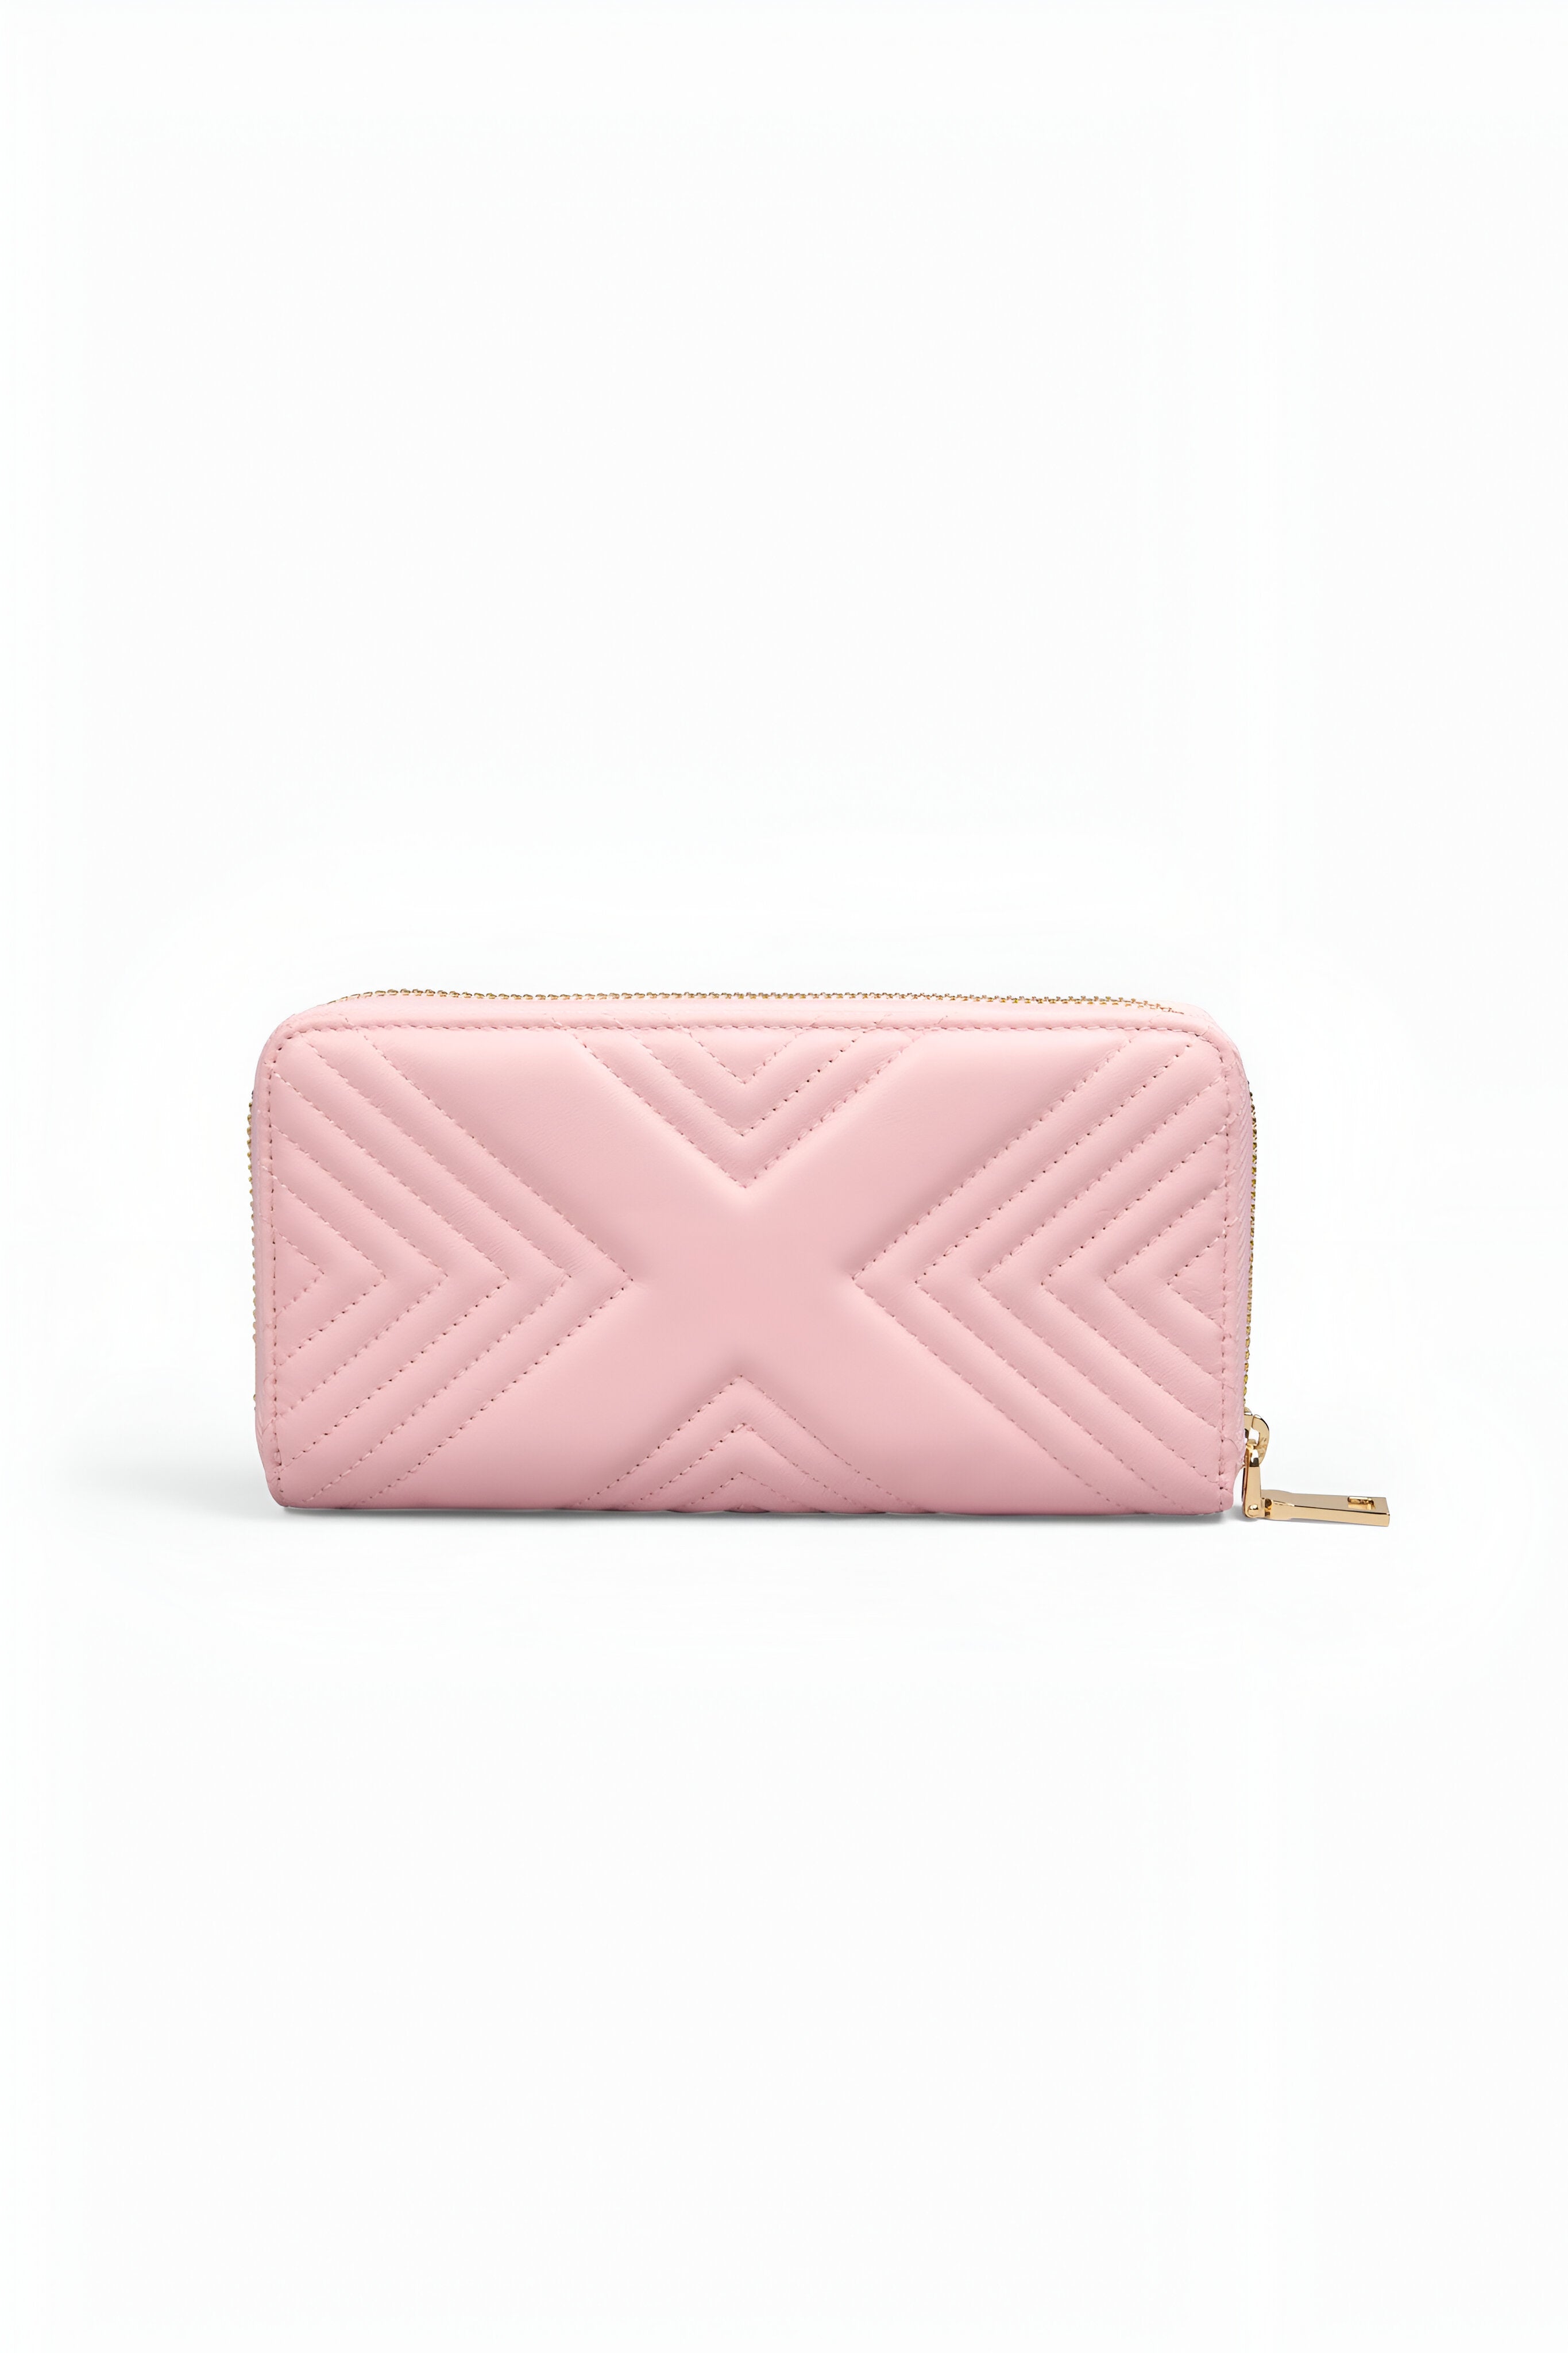 Zippy Glam Wallet - Princess Pink